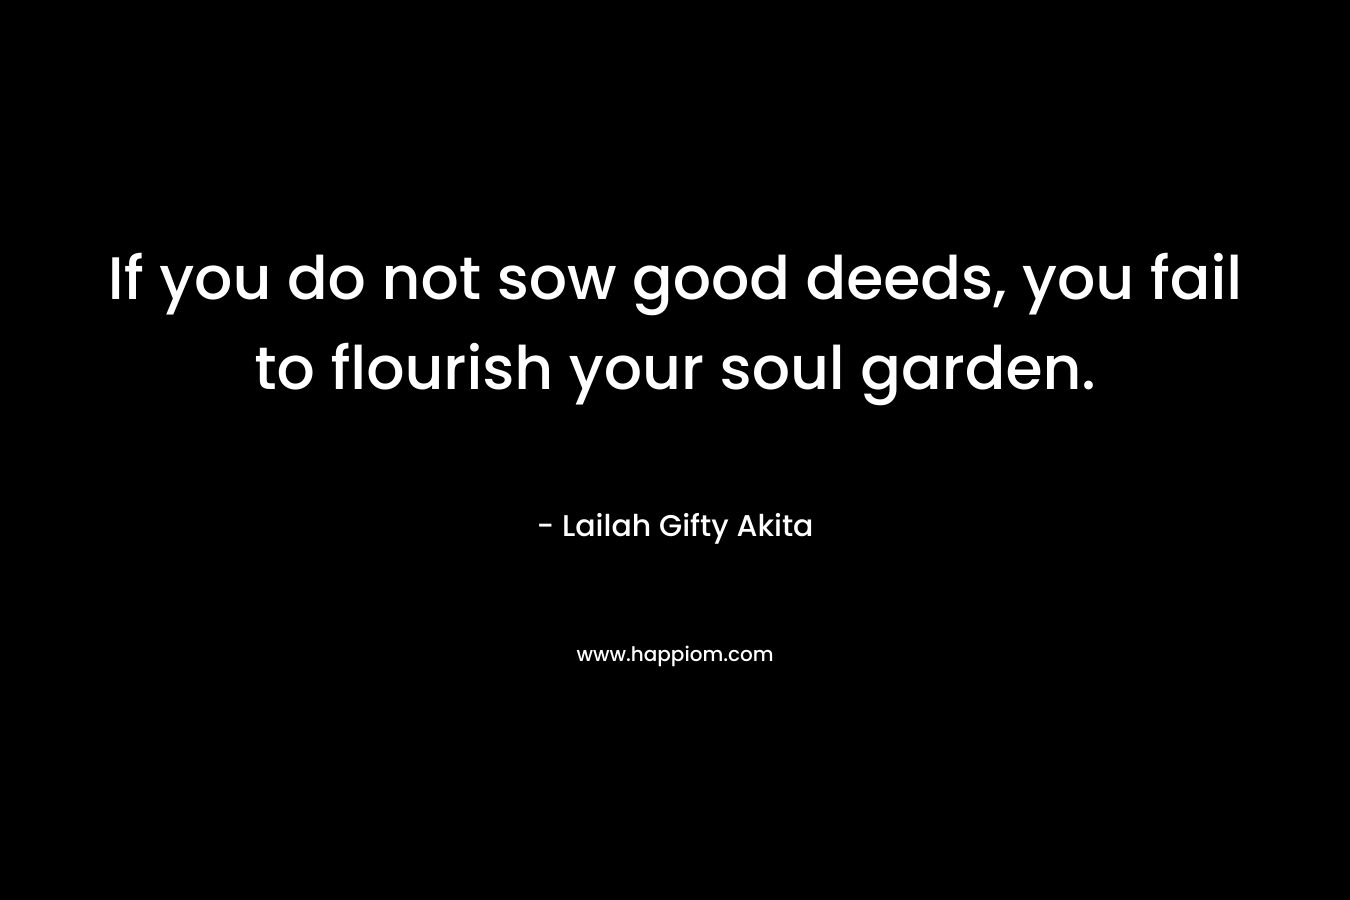 If you do not sow good deeds, you fail to flourish your soul garden.